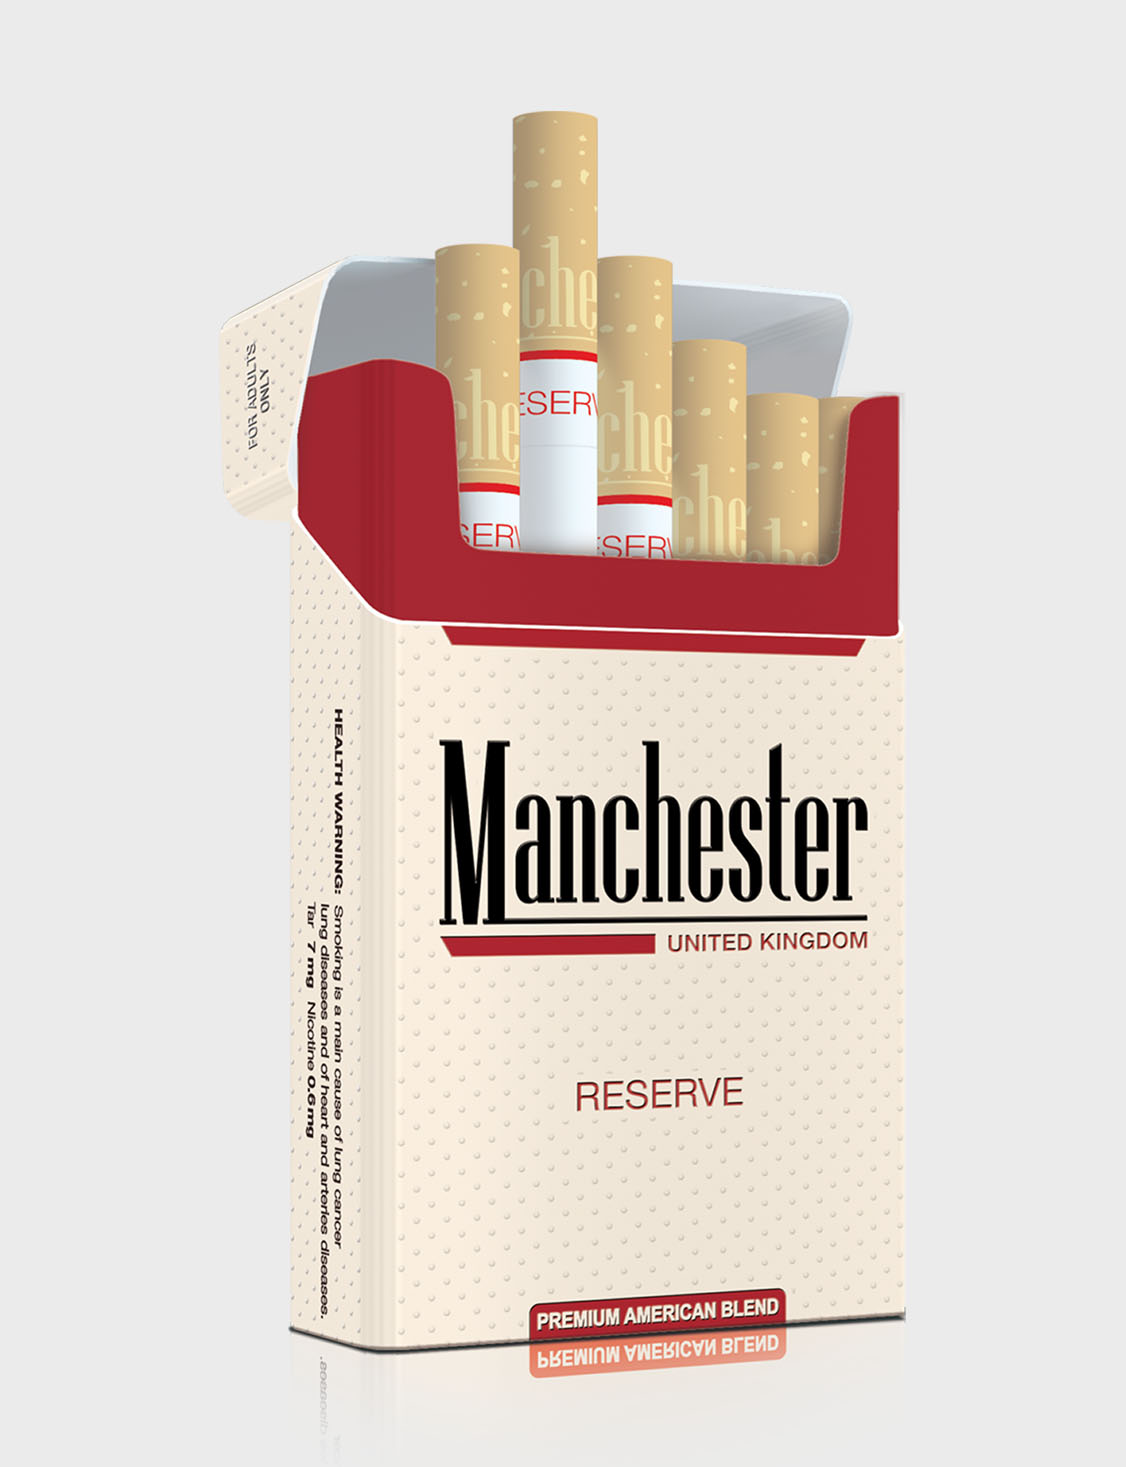 Манчестер компакт сигареты. Сигареты Manchester United Kingdom. Манчестер Квин Блю сигареты. Сигареты Манчестер компакт. Сигареты Манчестер Руби компакт.